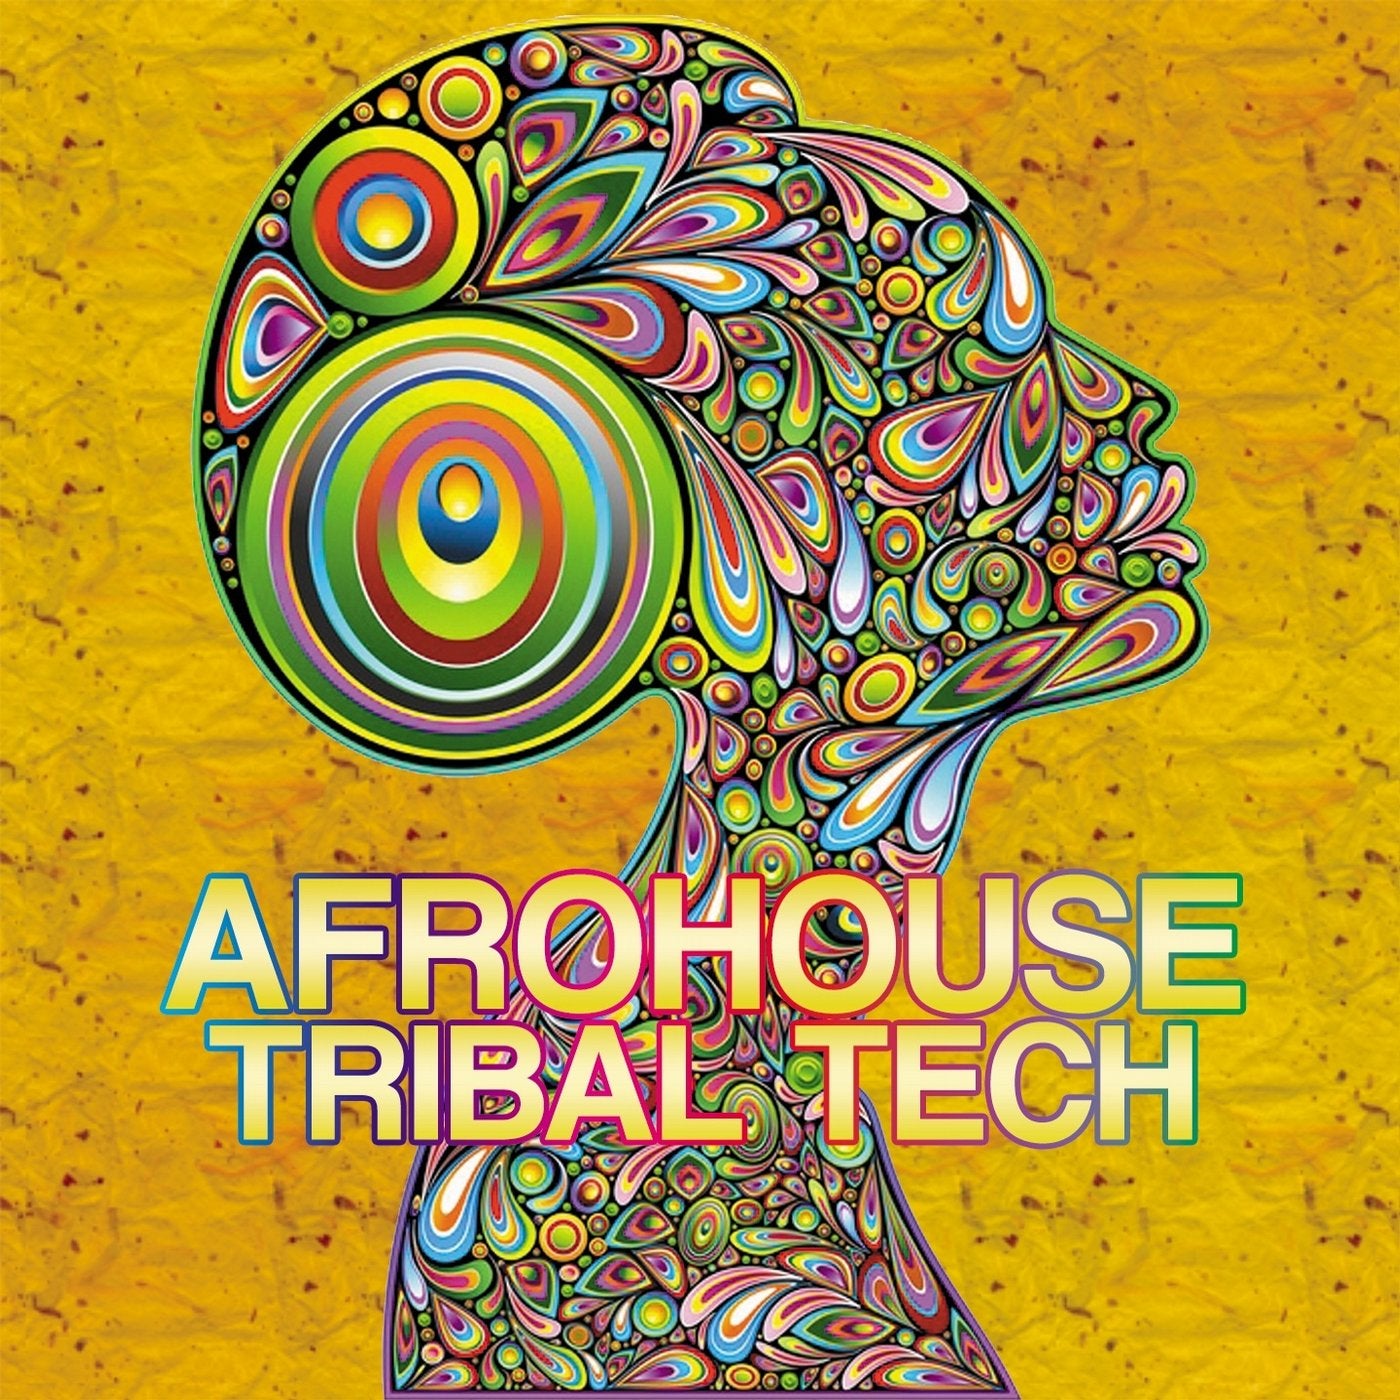 Afrohouse Tribal Tech (A Night of Afro Modern)